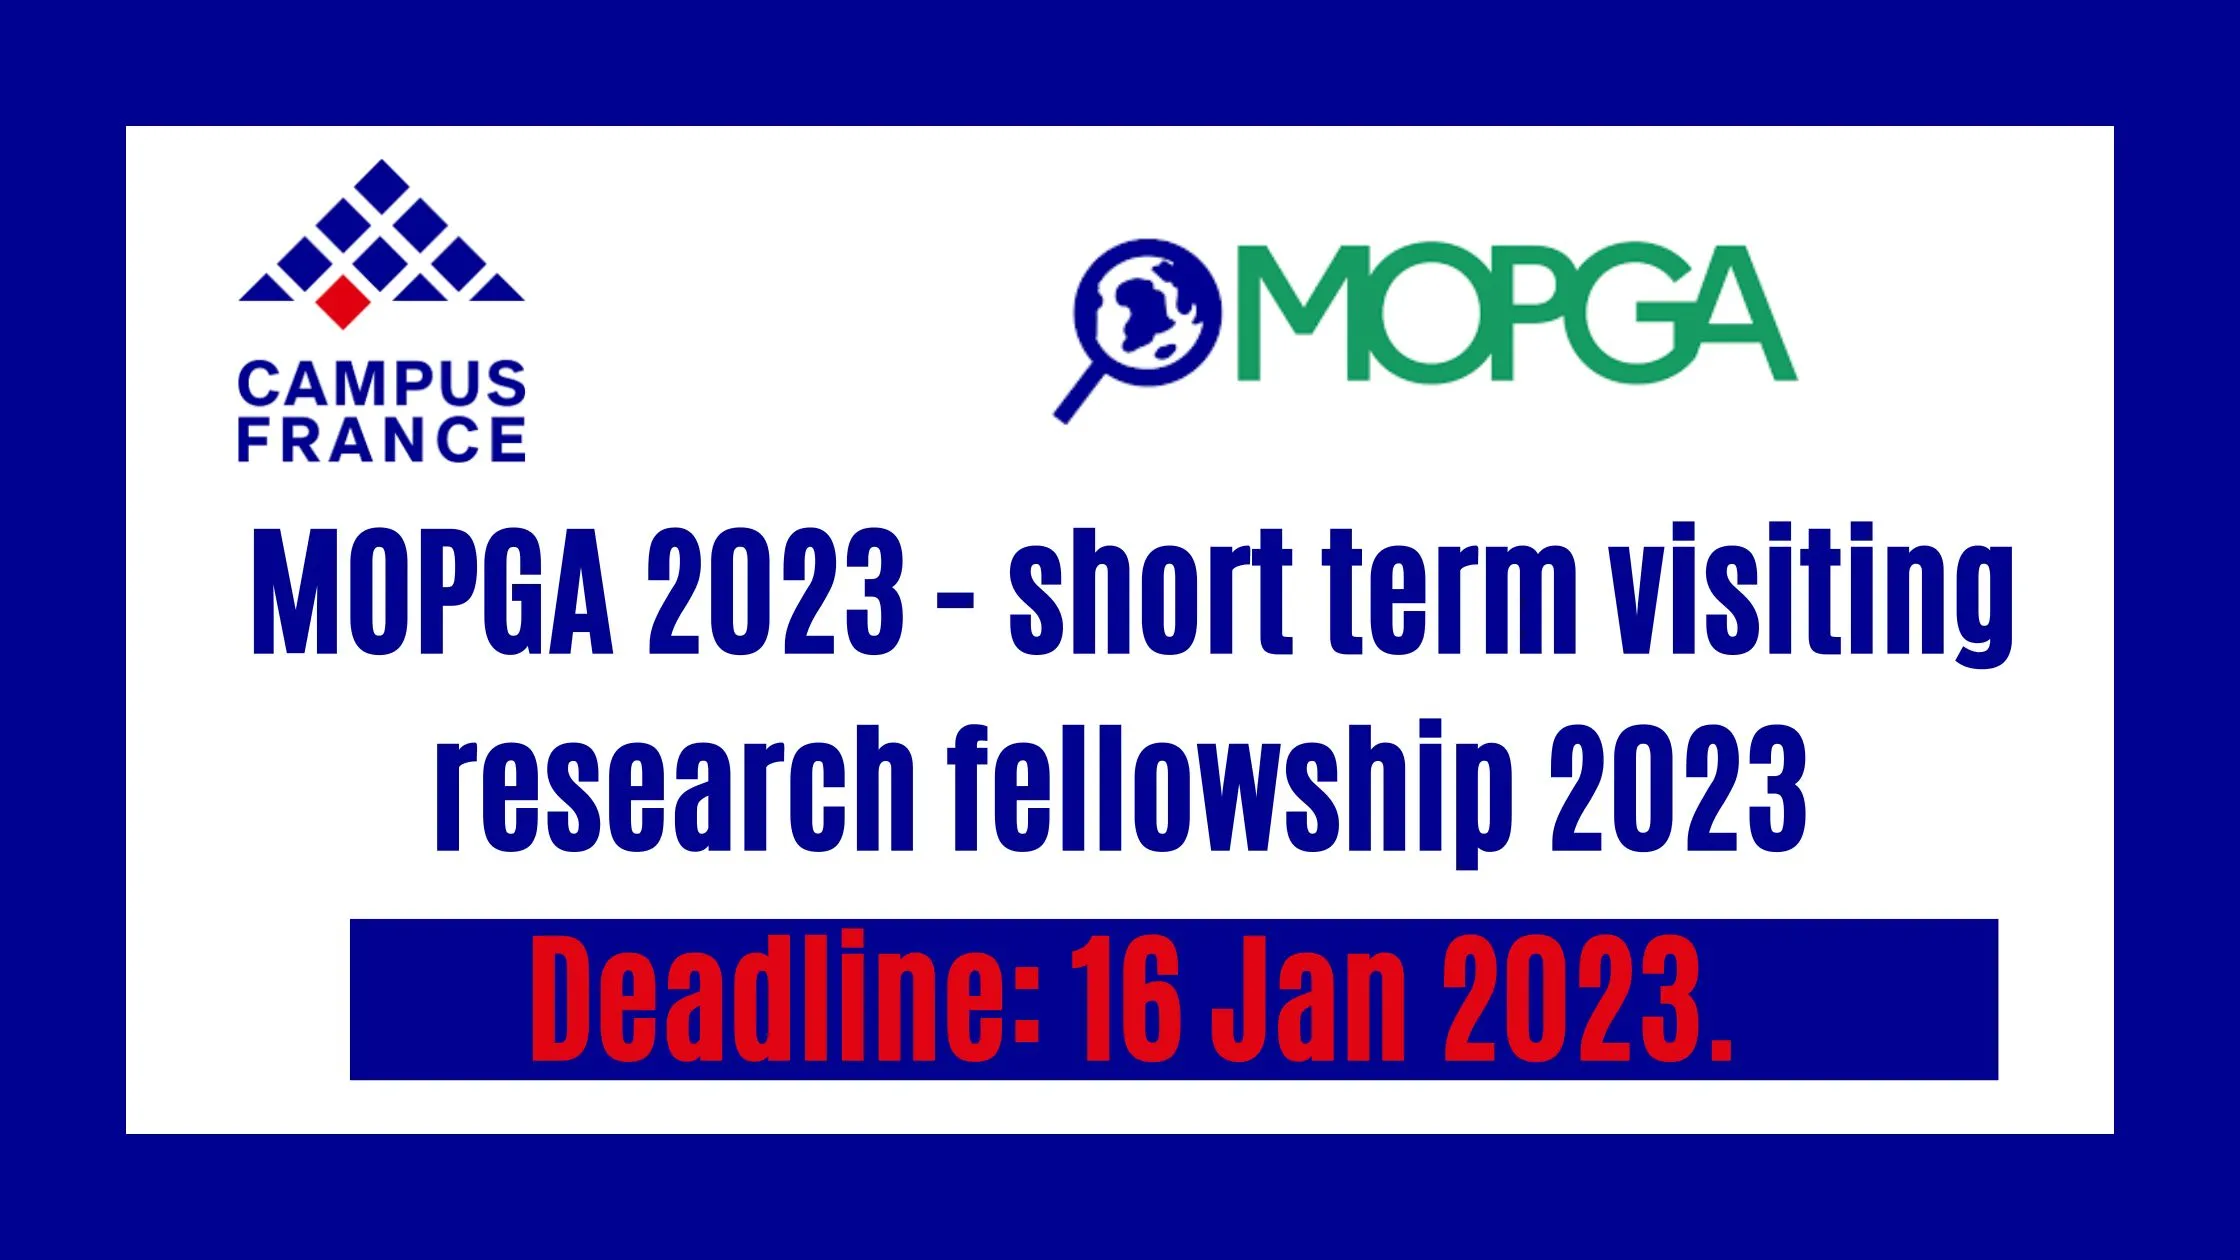 MOPGA 2023 - short term visiting research fellowship 2023